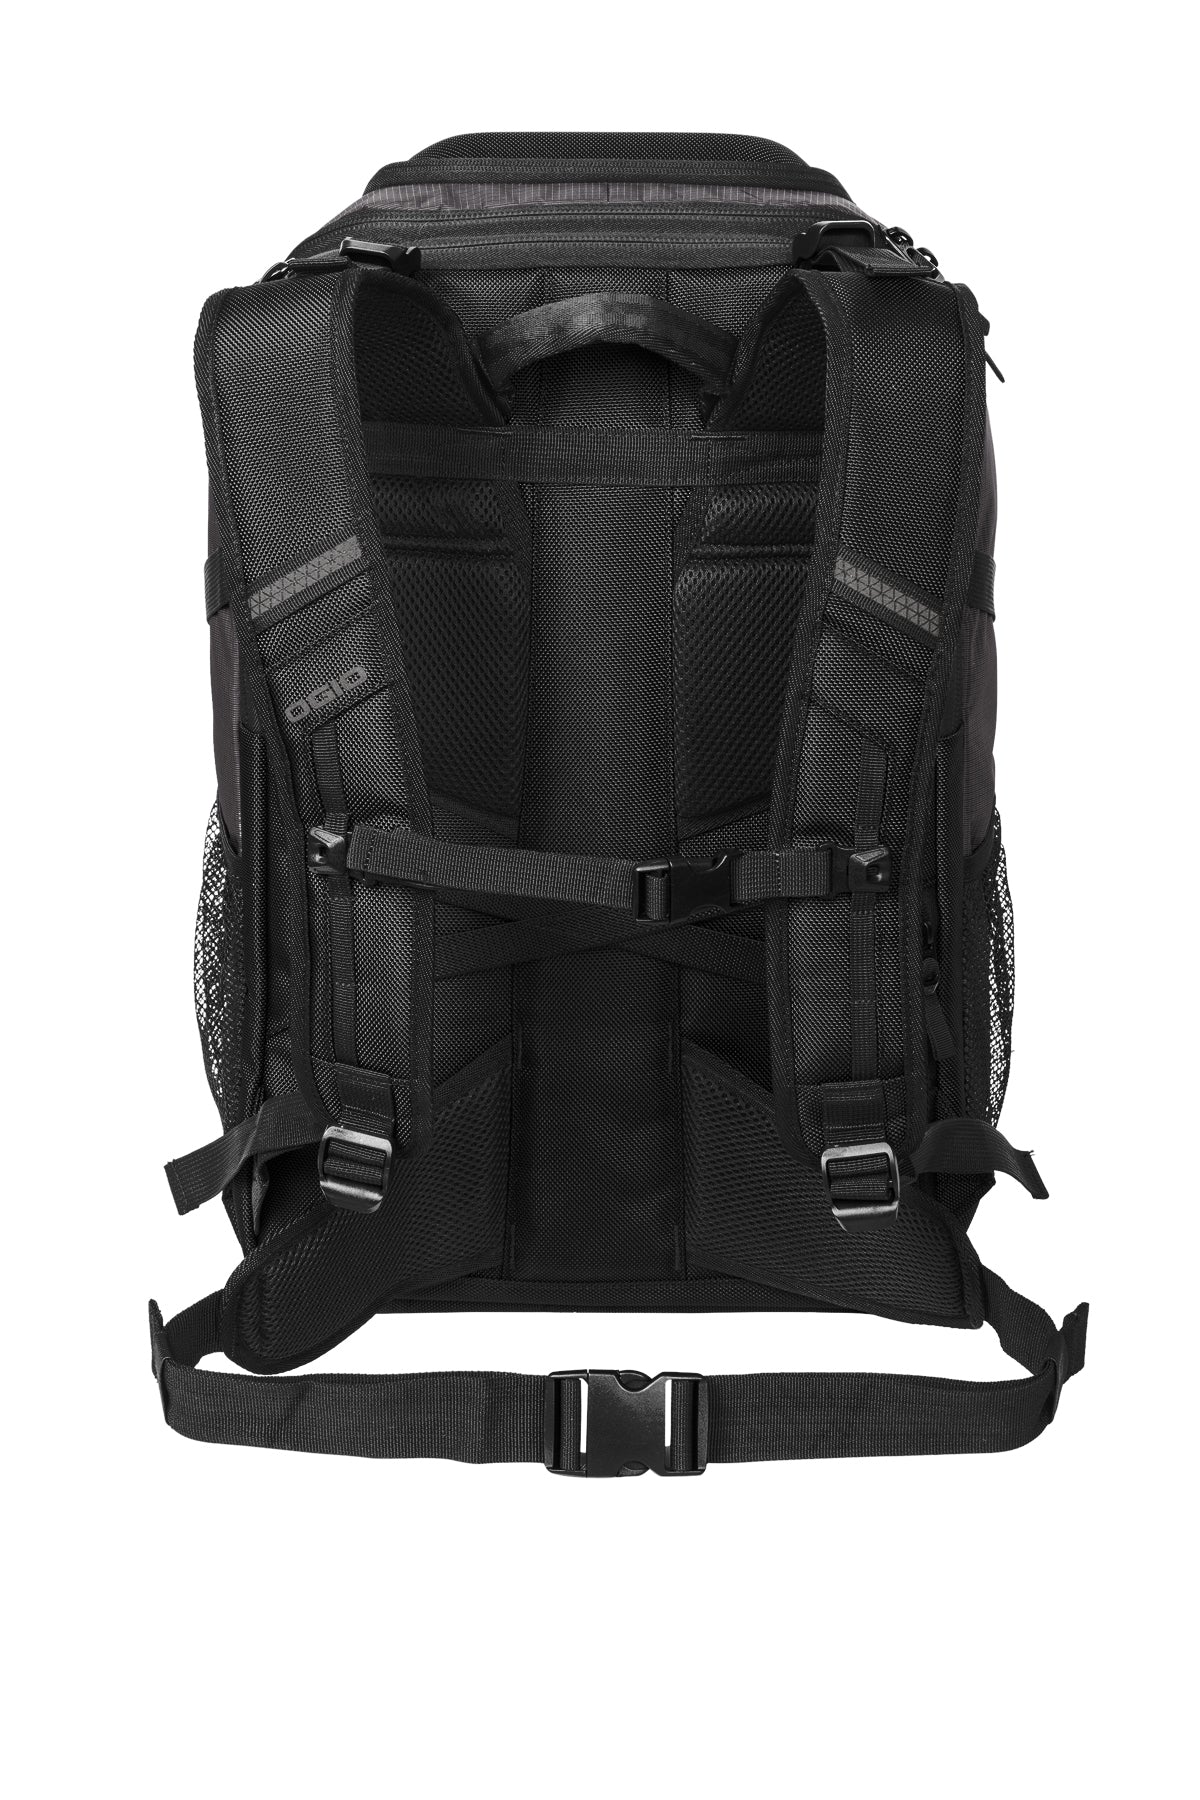 OGIO Motion X-Over Customzied Backpacks, Diesel Grey